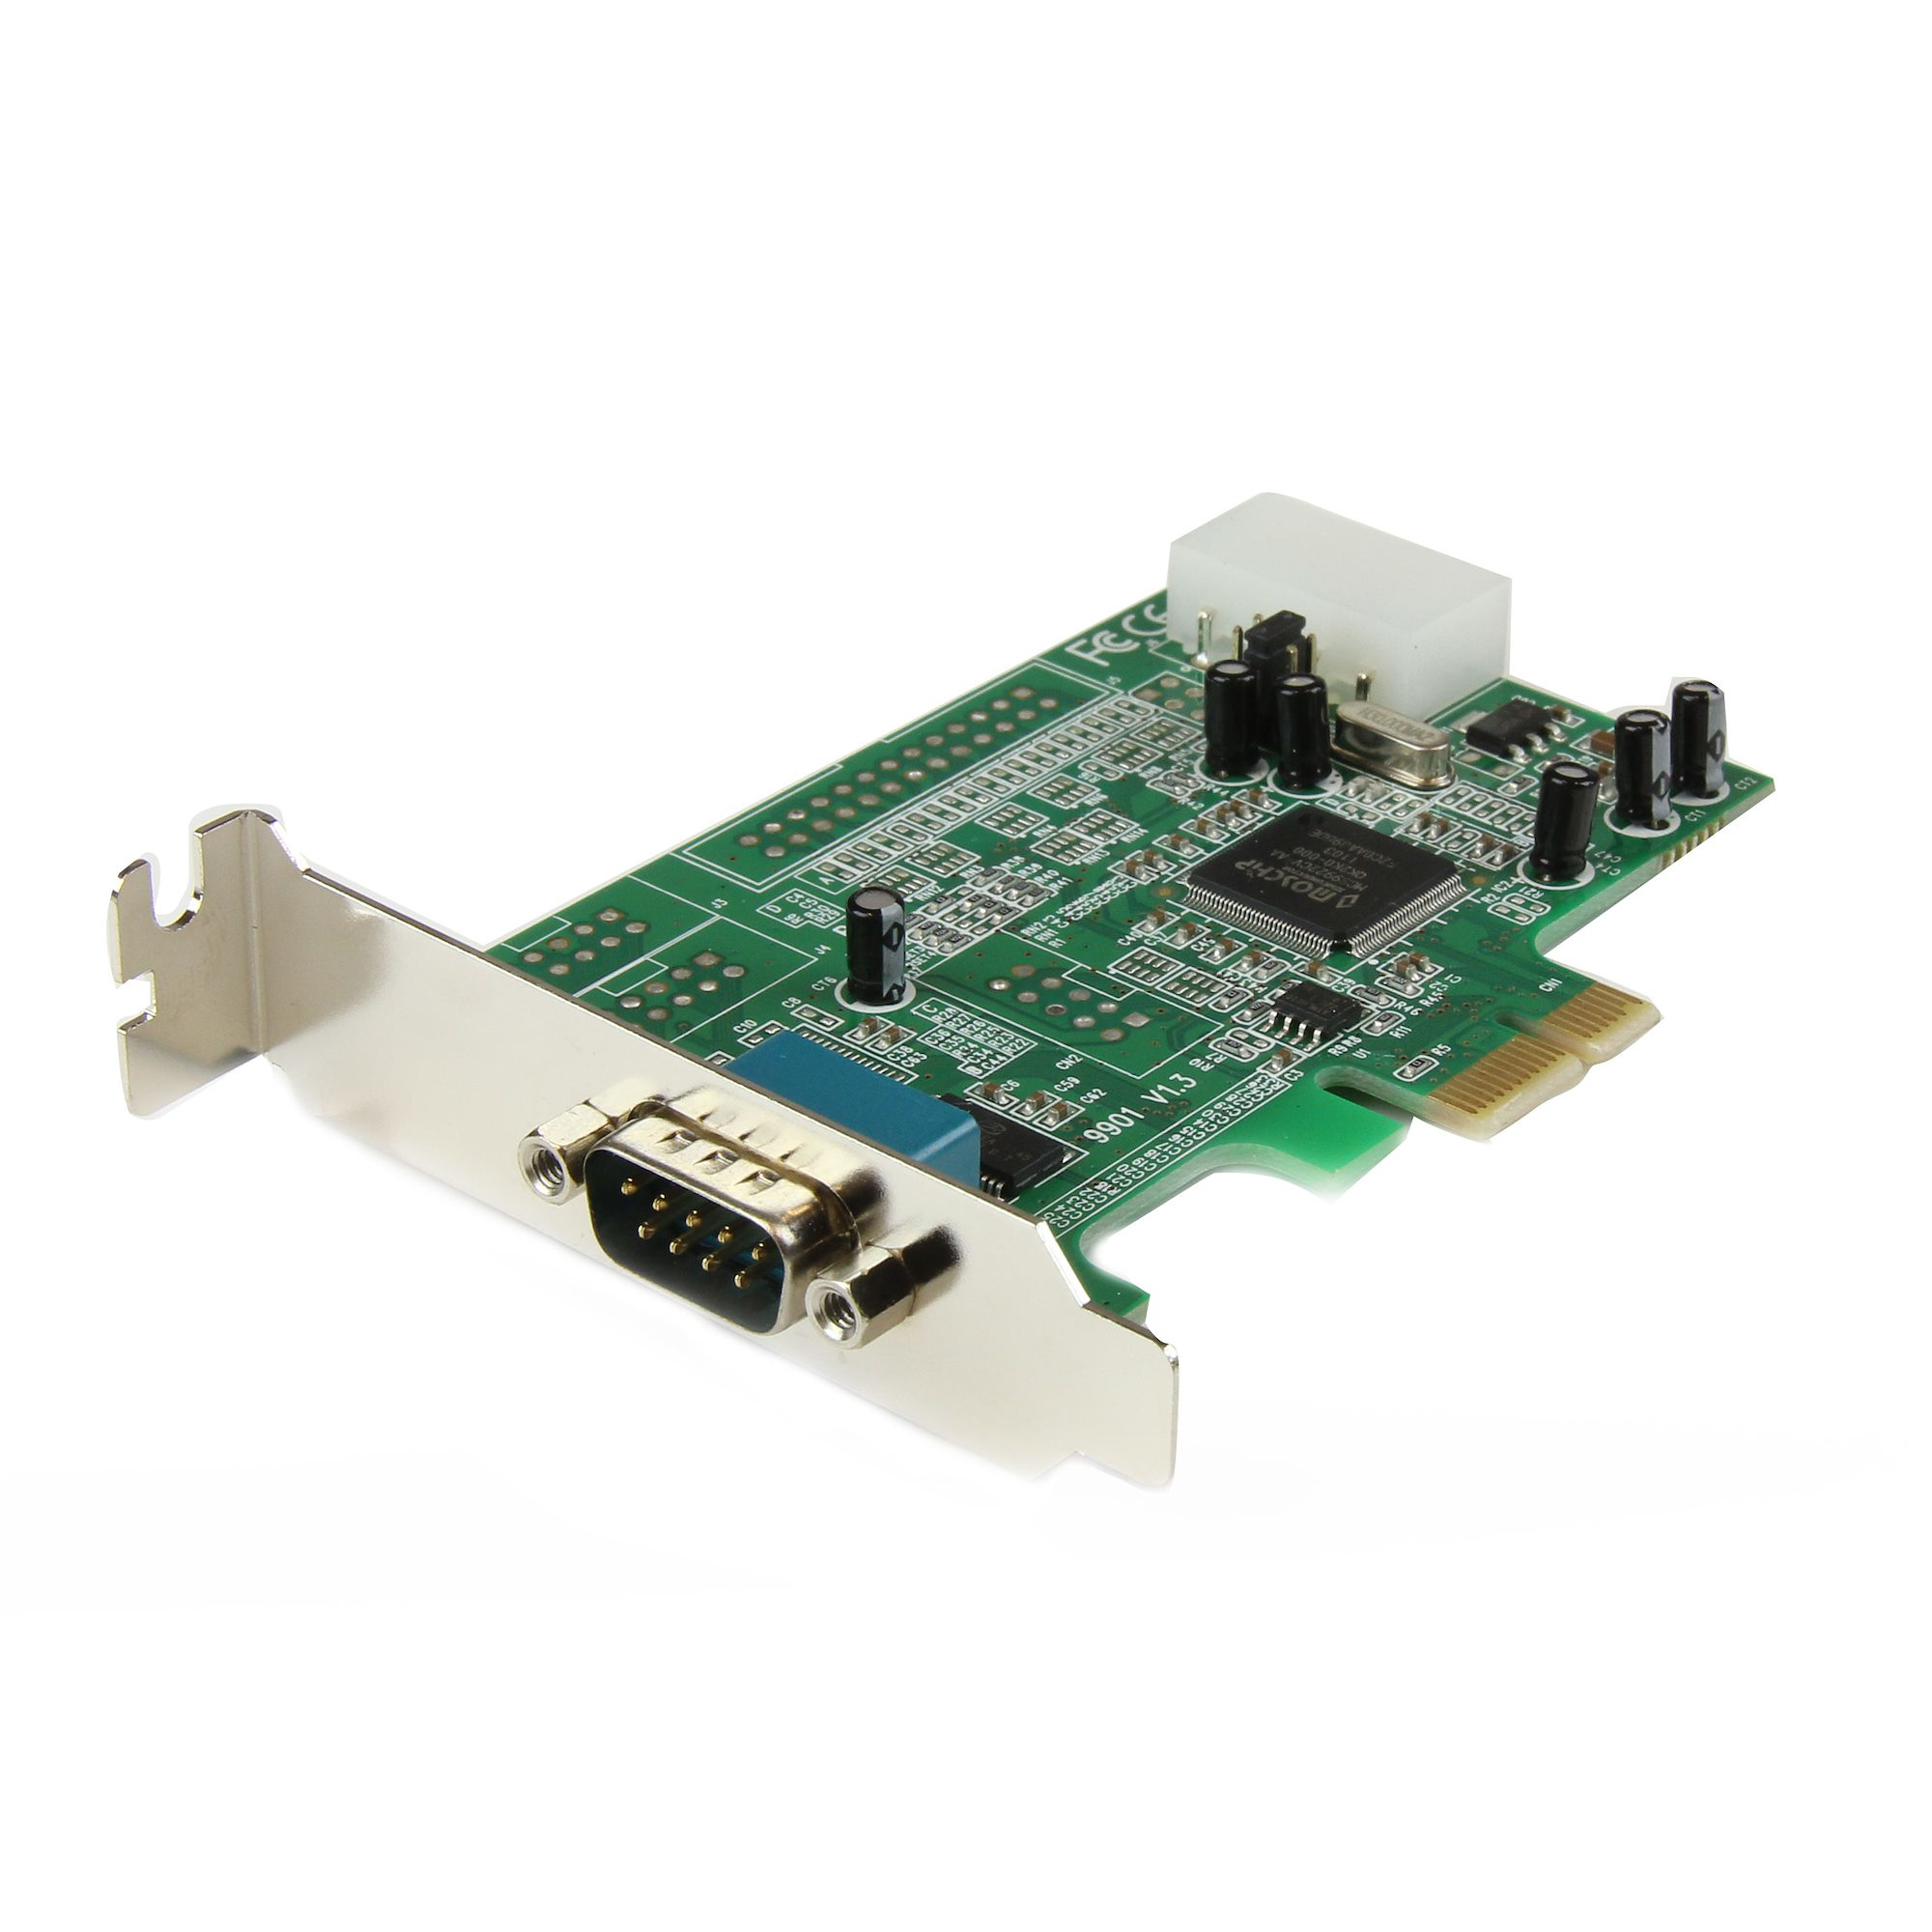 StarTech.com 1-port PCI Express RS232 Serial Adapter Card - PCIe RS232 Serial Host Controller Card - PCIe to Serial DB9 - 16550 UART - Low Profile Expansion Card - Windows & Linux